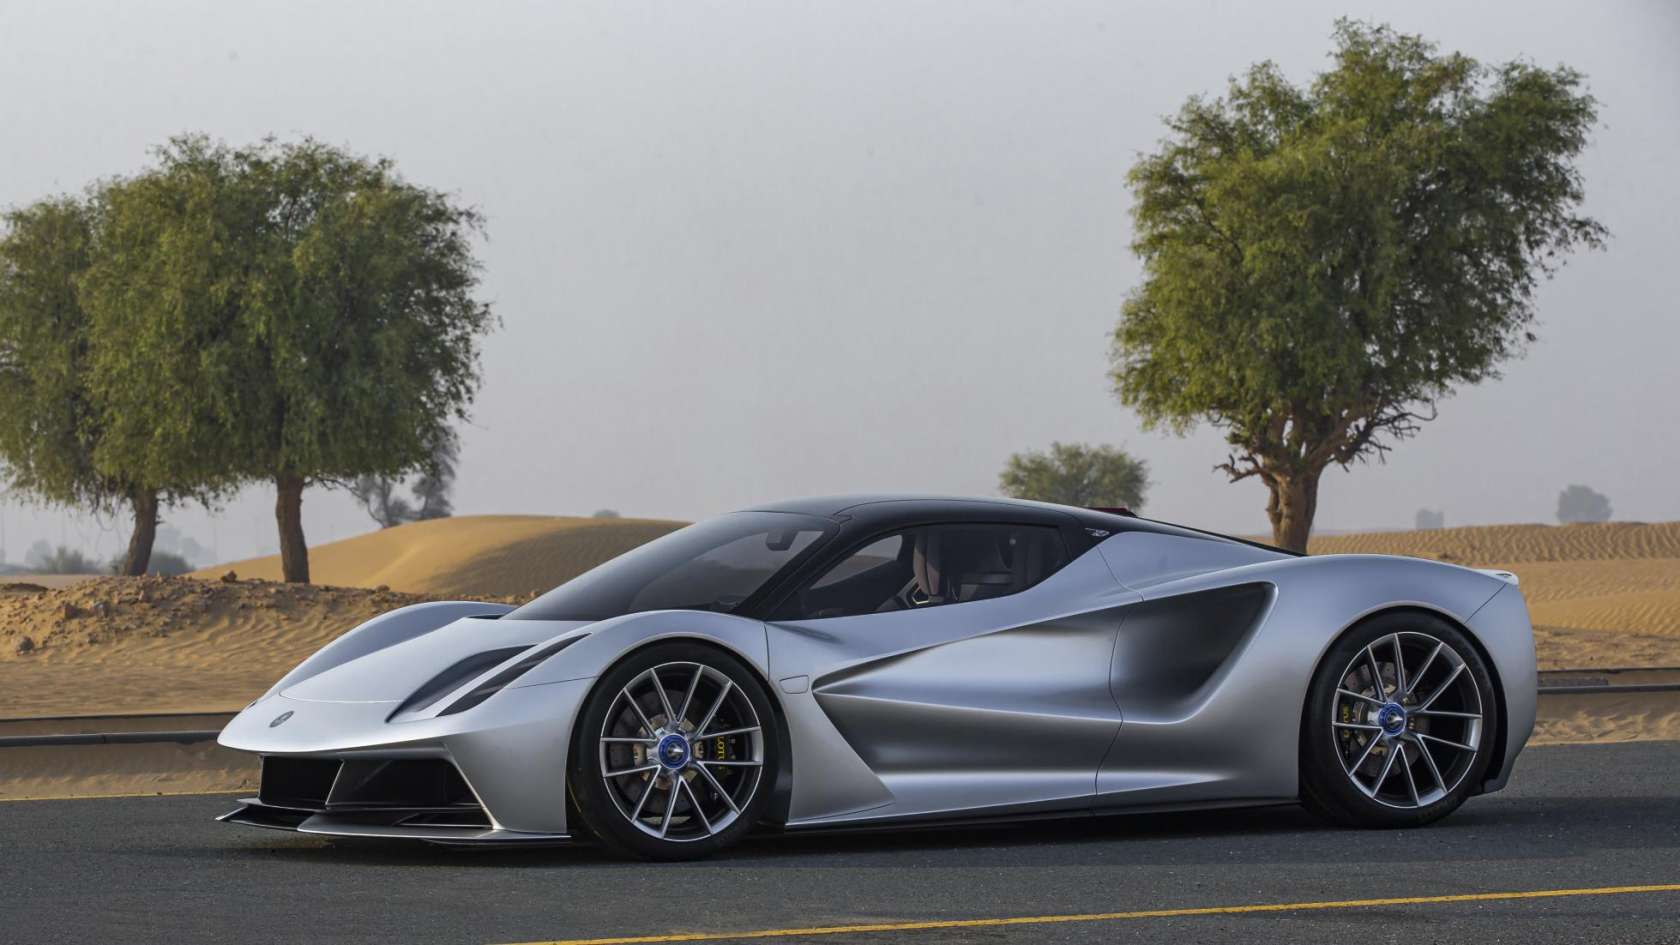 The Lotus Evija lands in Dubai, and it's unlike any car